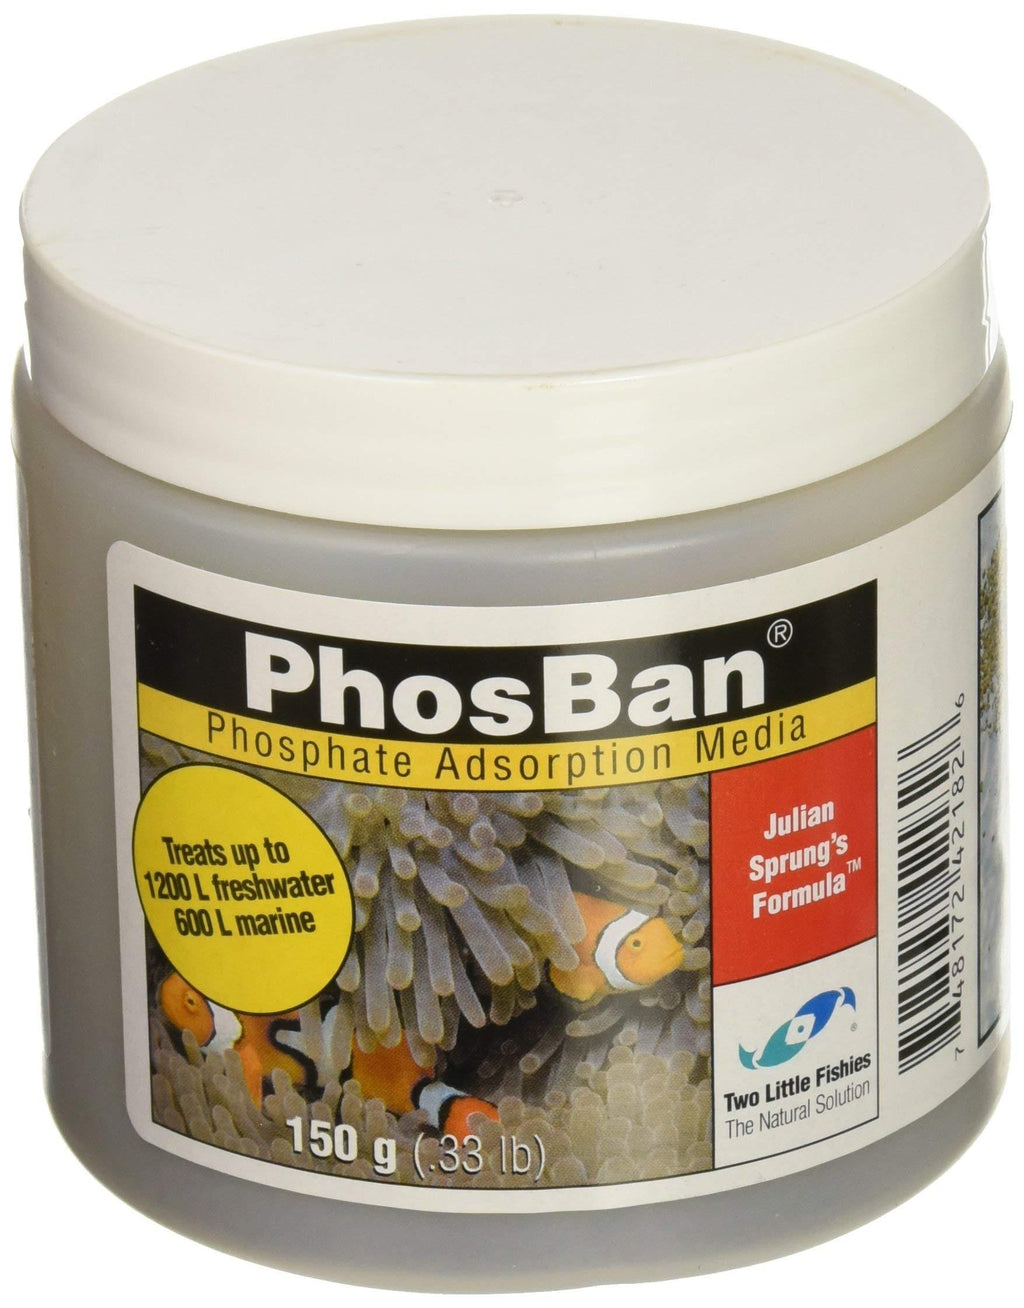 [Australia] - Two Little Fishies ATLPB2 Phosban 150gm 